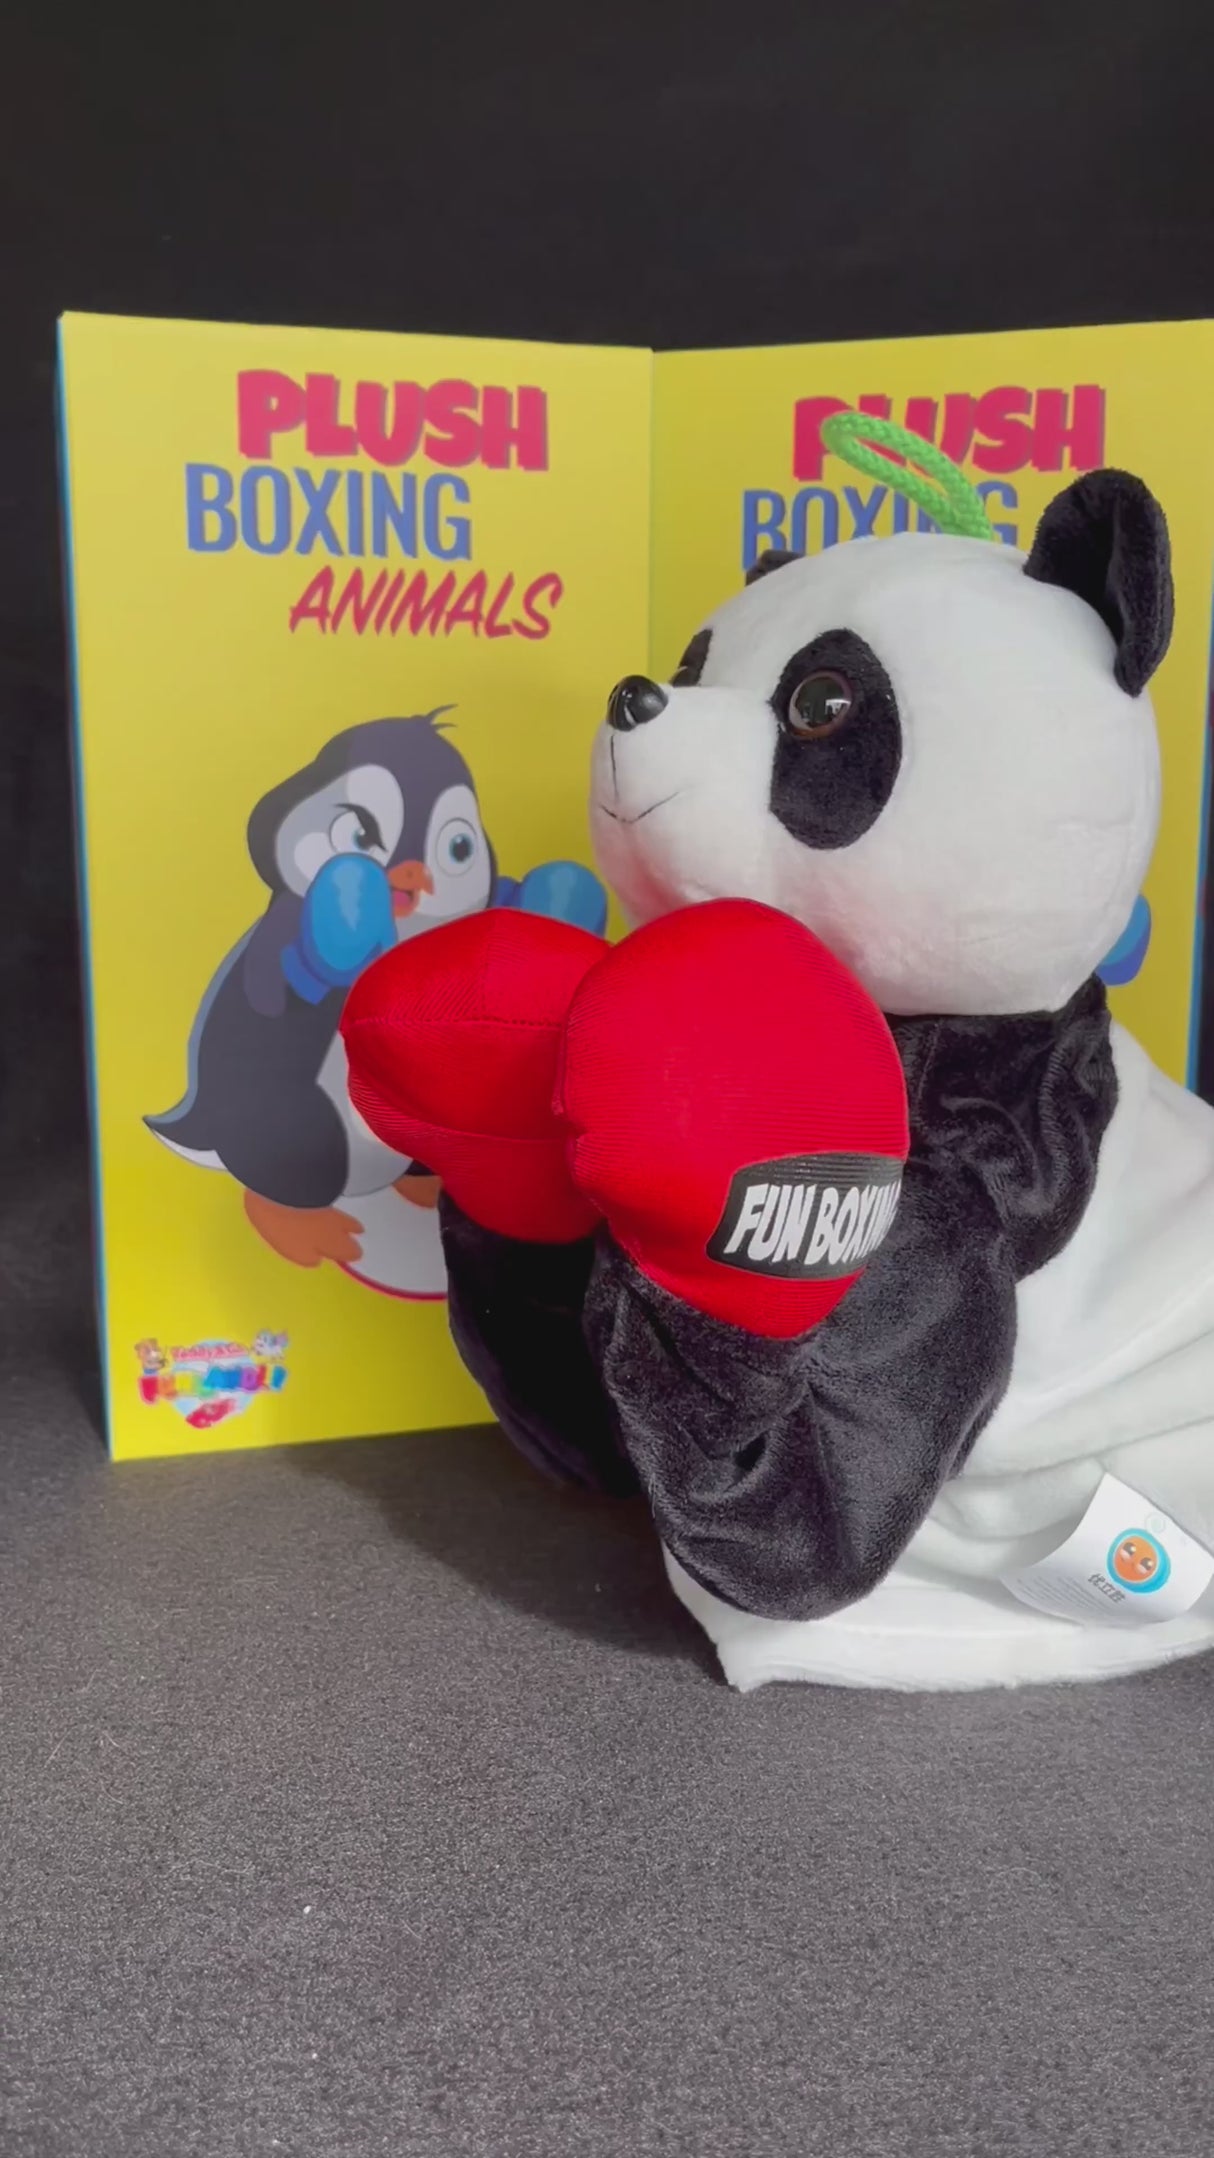 Plush Panda Boxing Toy